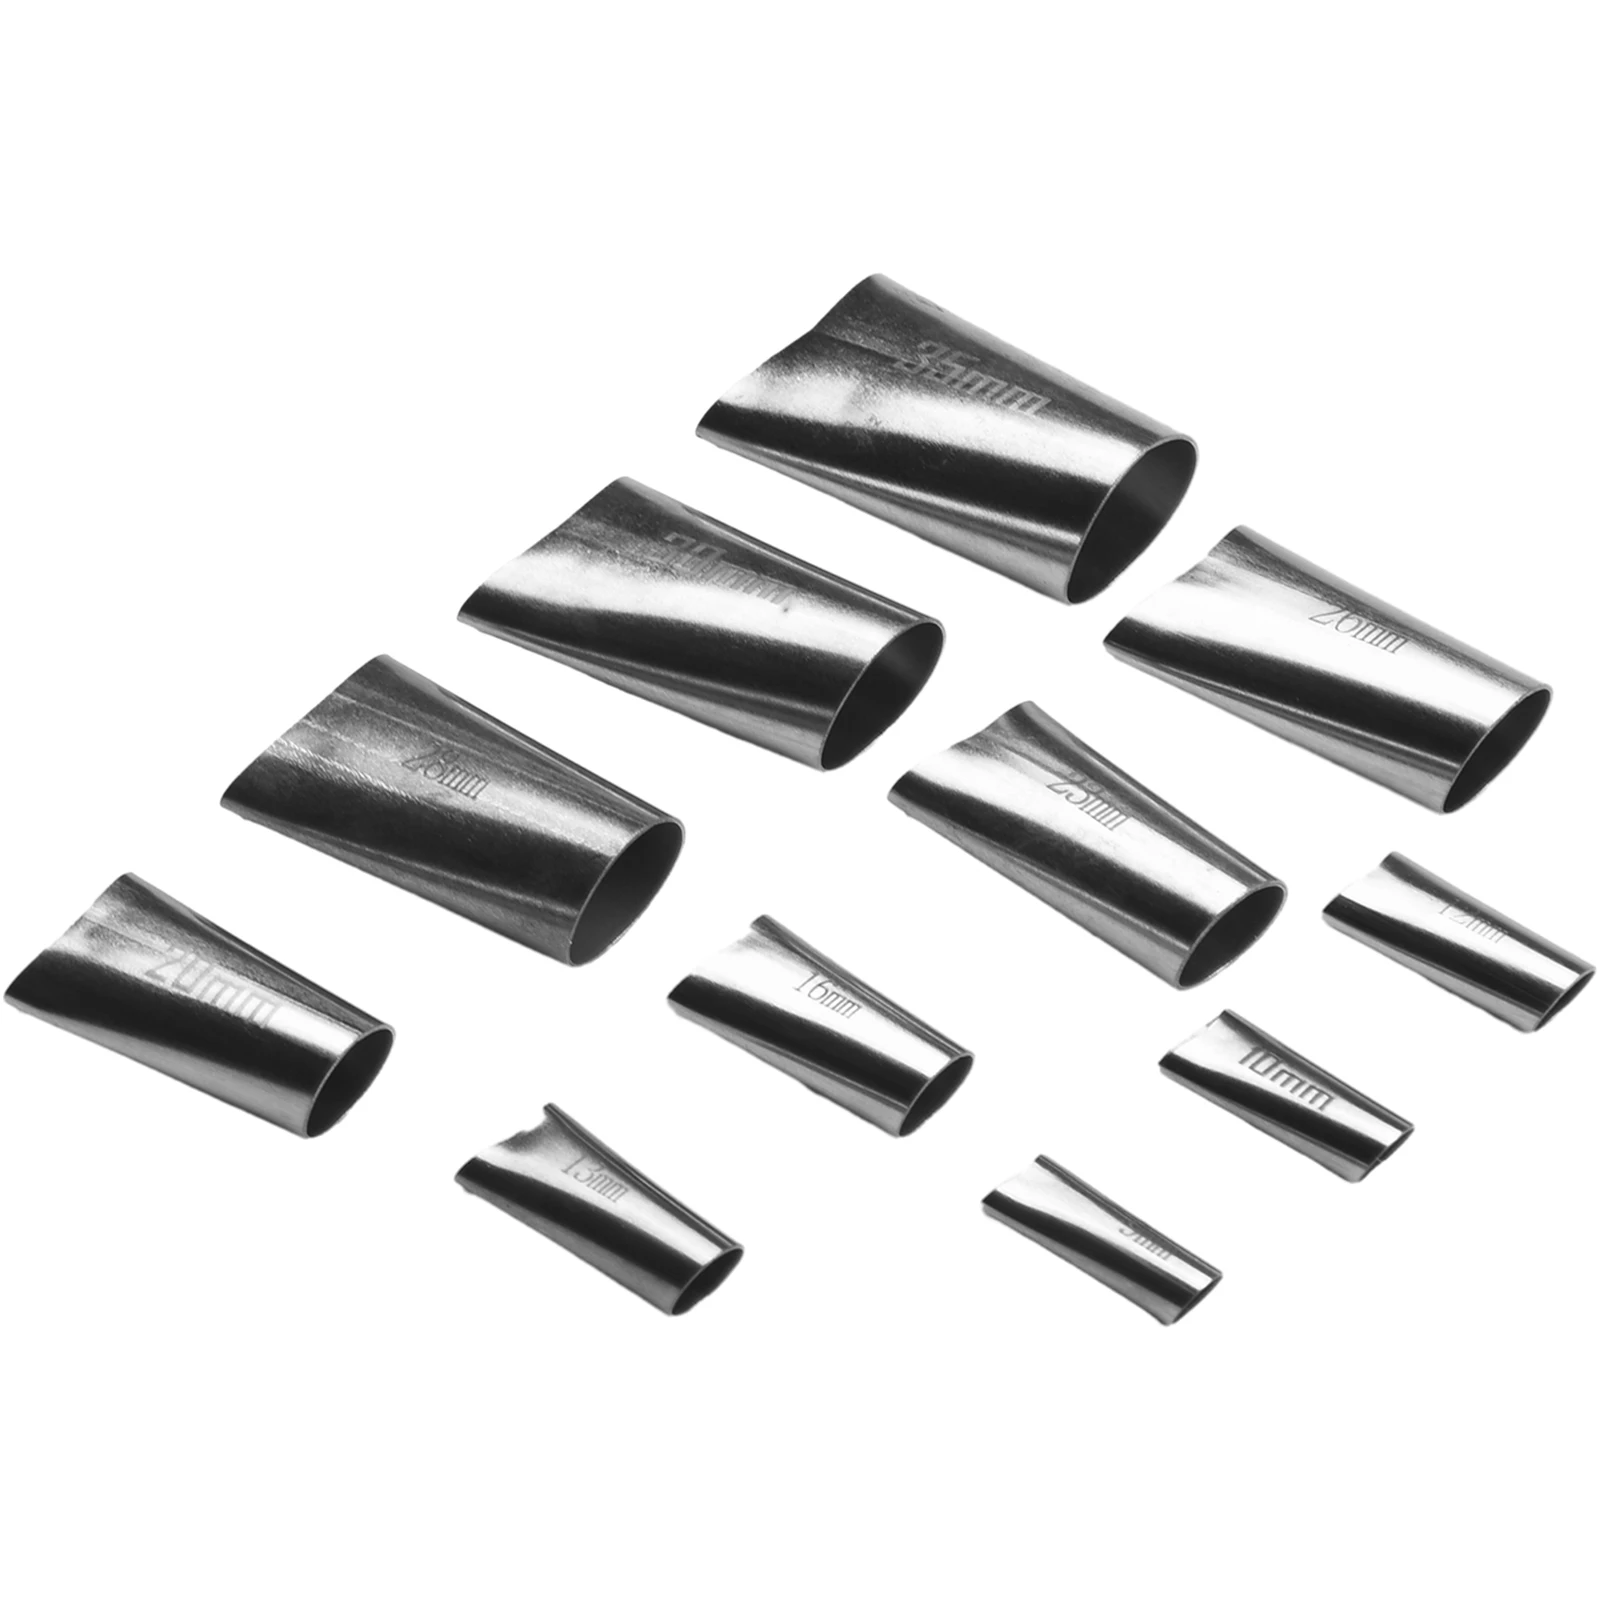 

Caulking Finisher Caulking Nozzle Construction Tools 14pcs Caulk Applicator Durable High Quality Stainless Steel